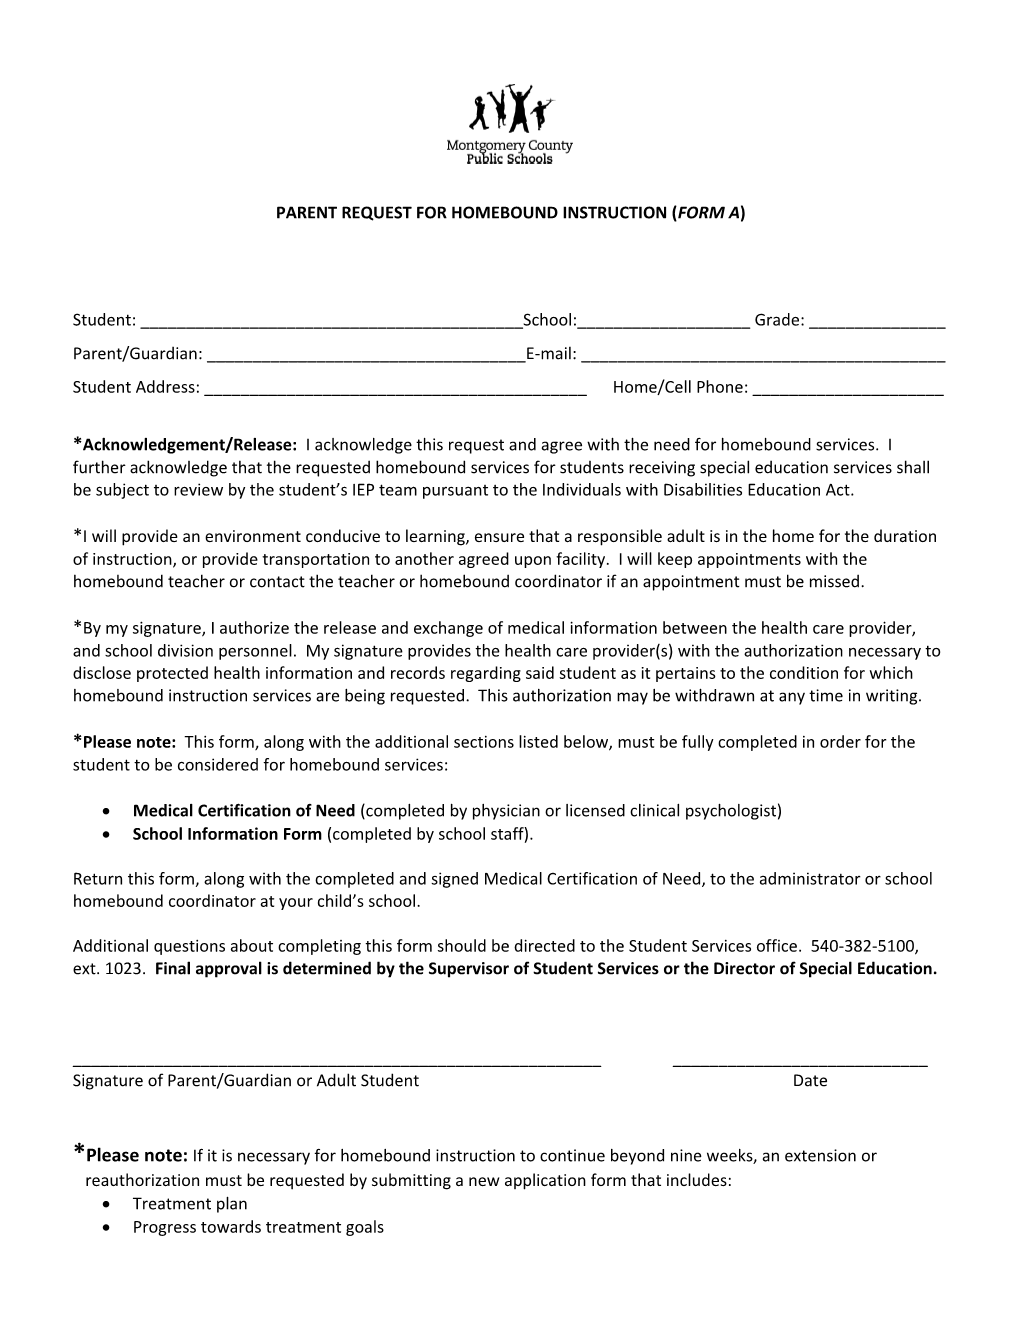 Parent Request for Homebound Instruction (Form A)